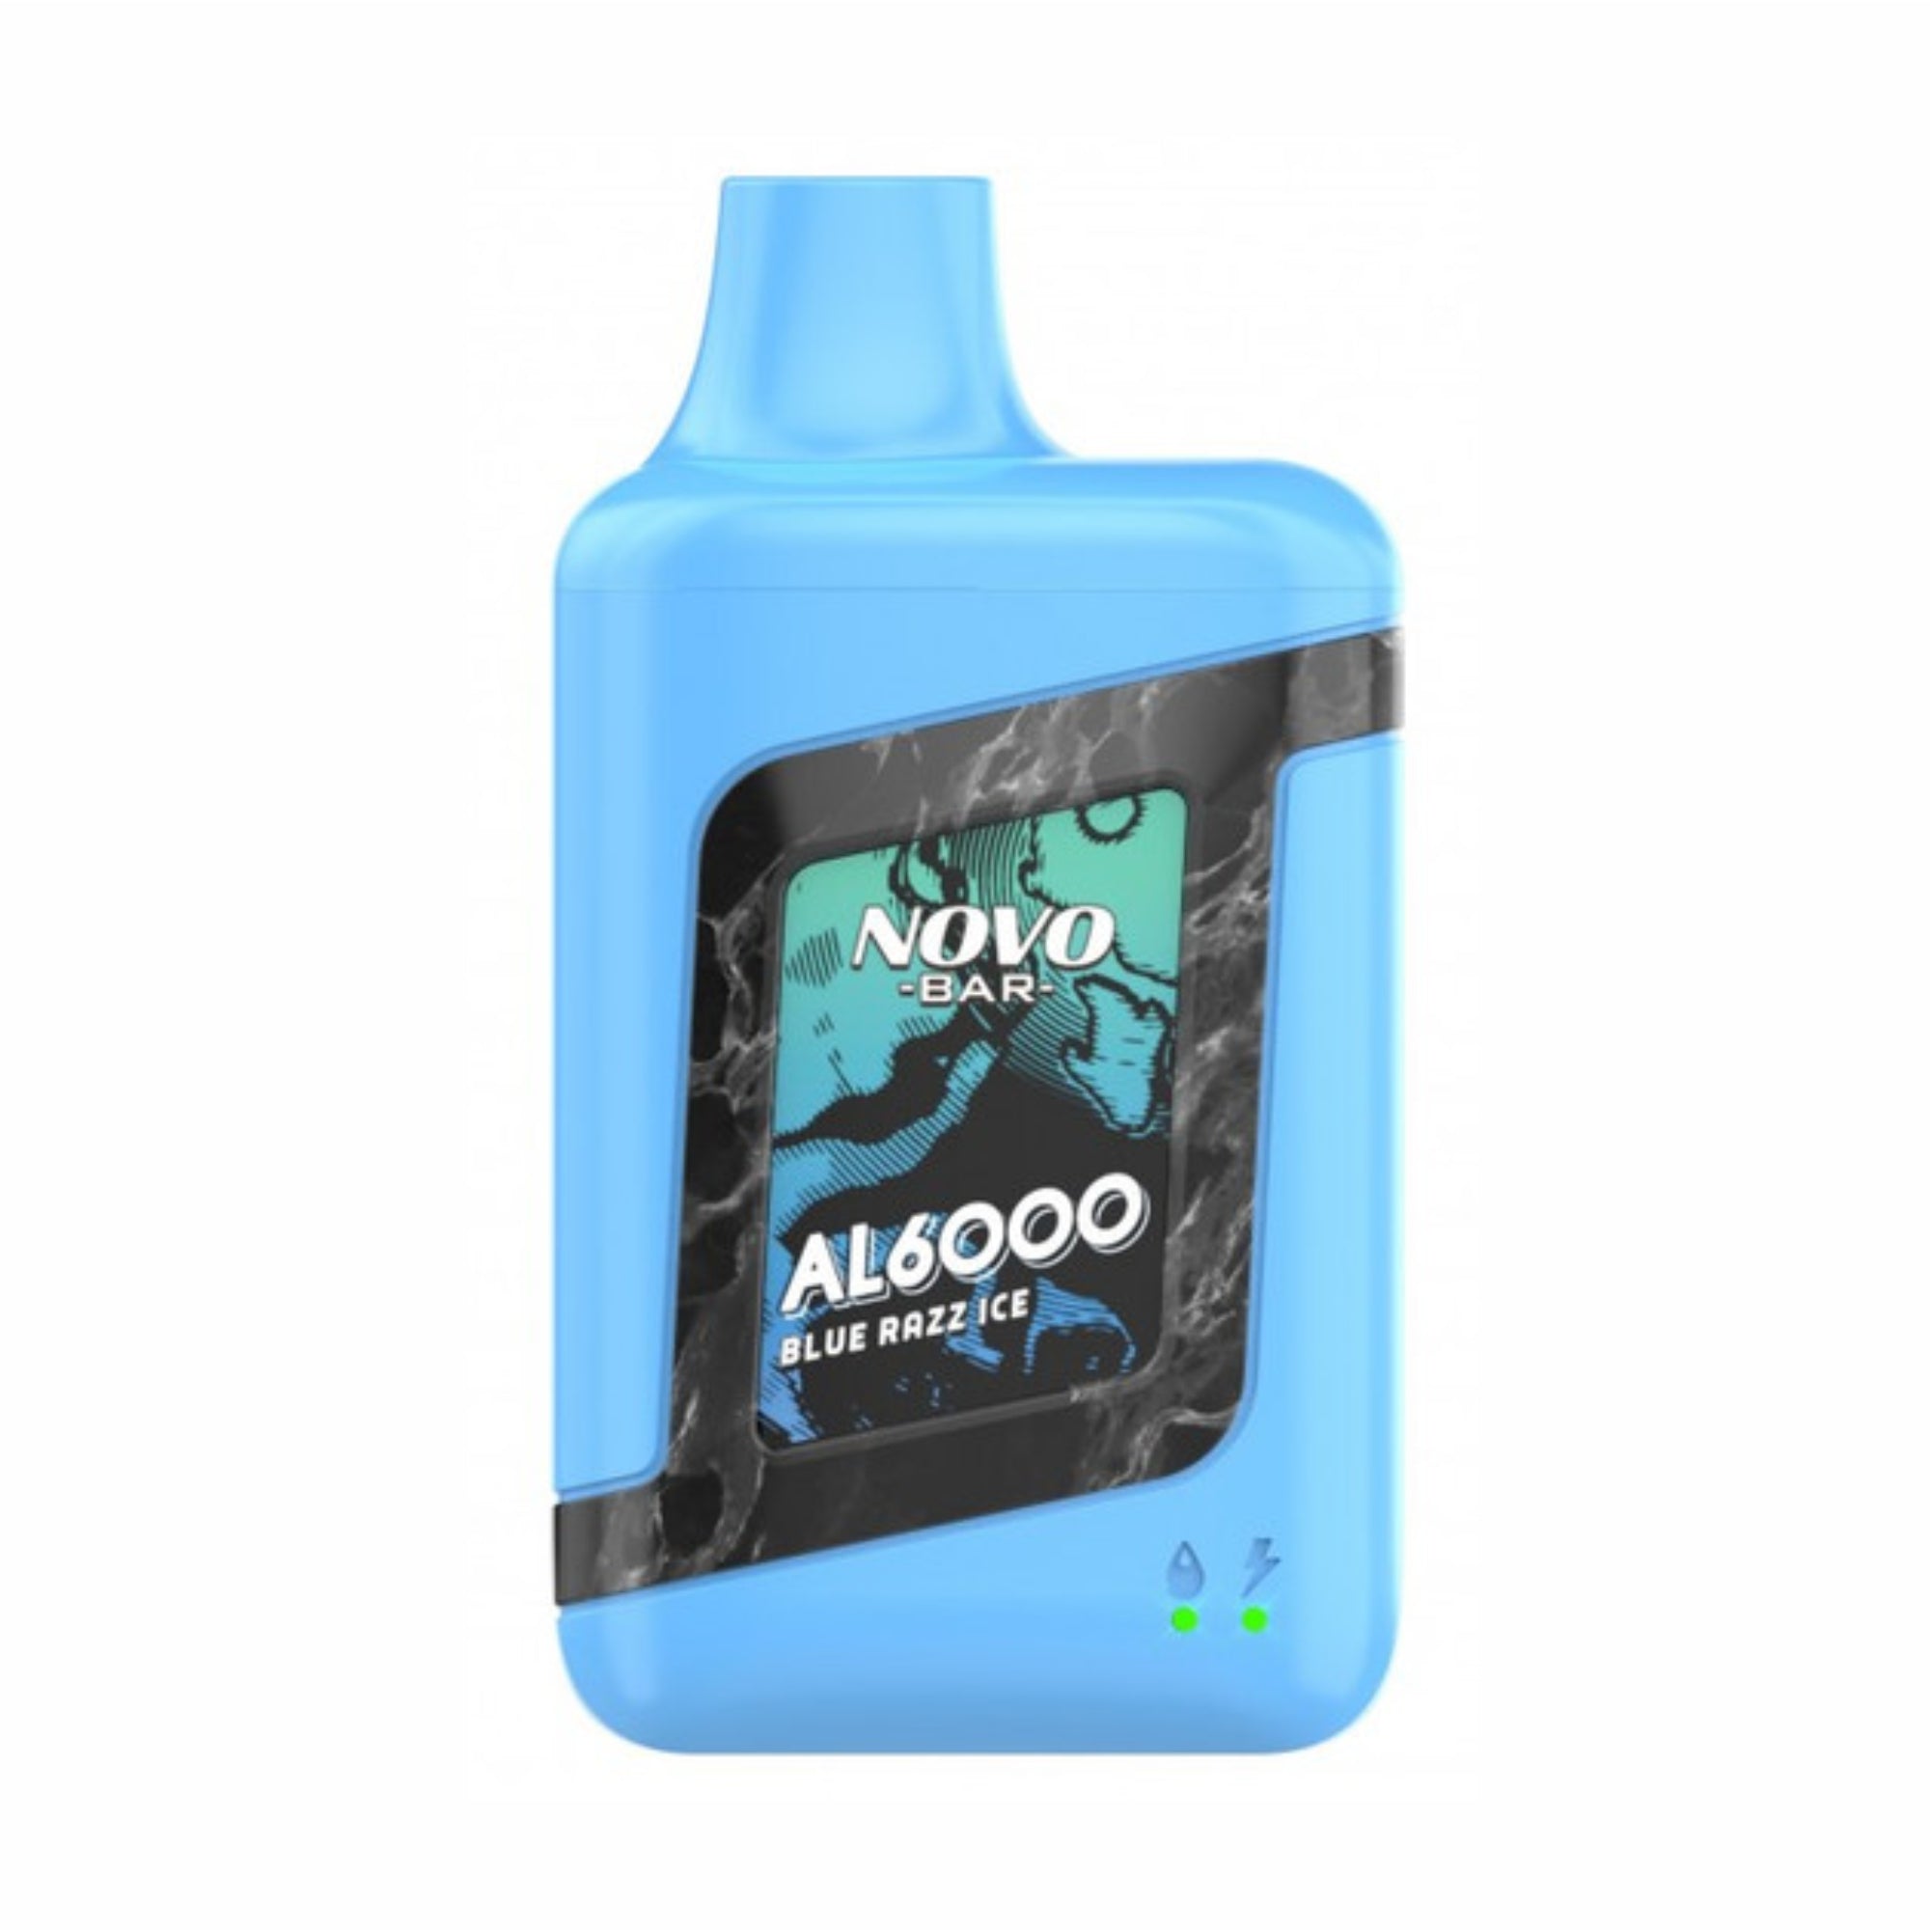 Smok Novo Bar AL6000 Disposable Vape Wholesale - 1 Box / 10pcs